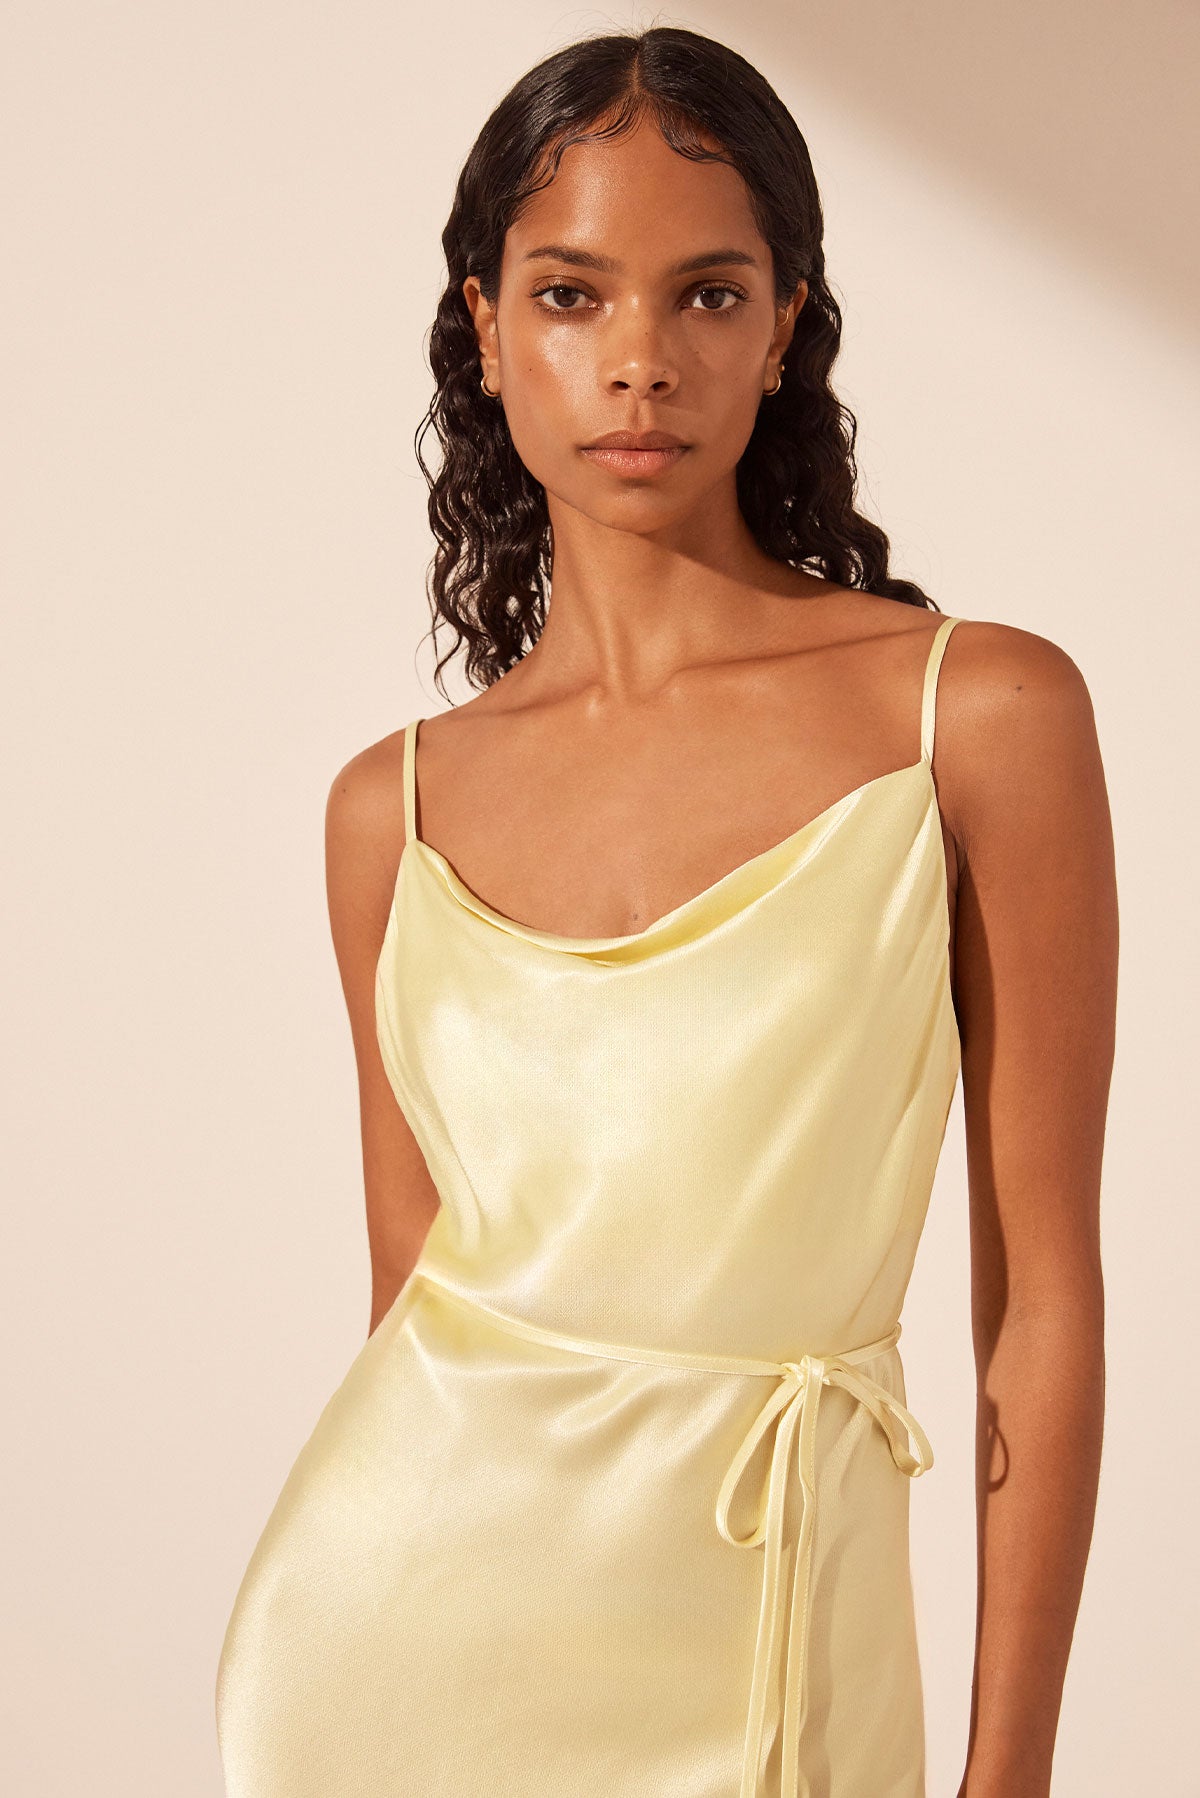 Yellow Midi Dress - Satin Cowl Neck Dress - Cream Adjustable Runched Dress